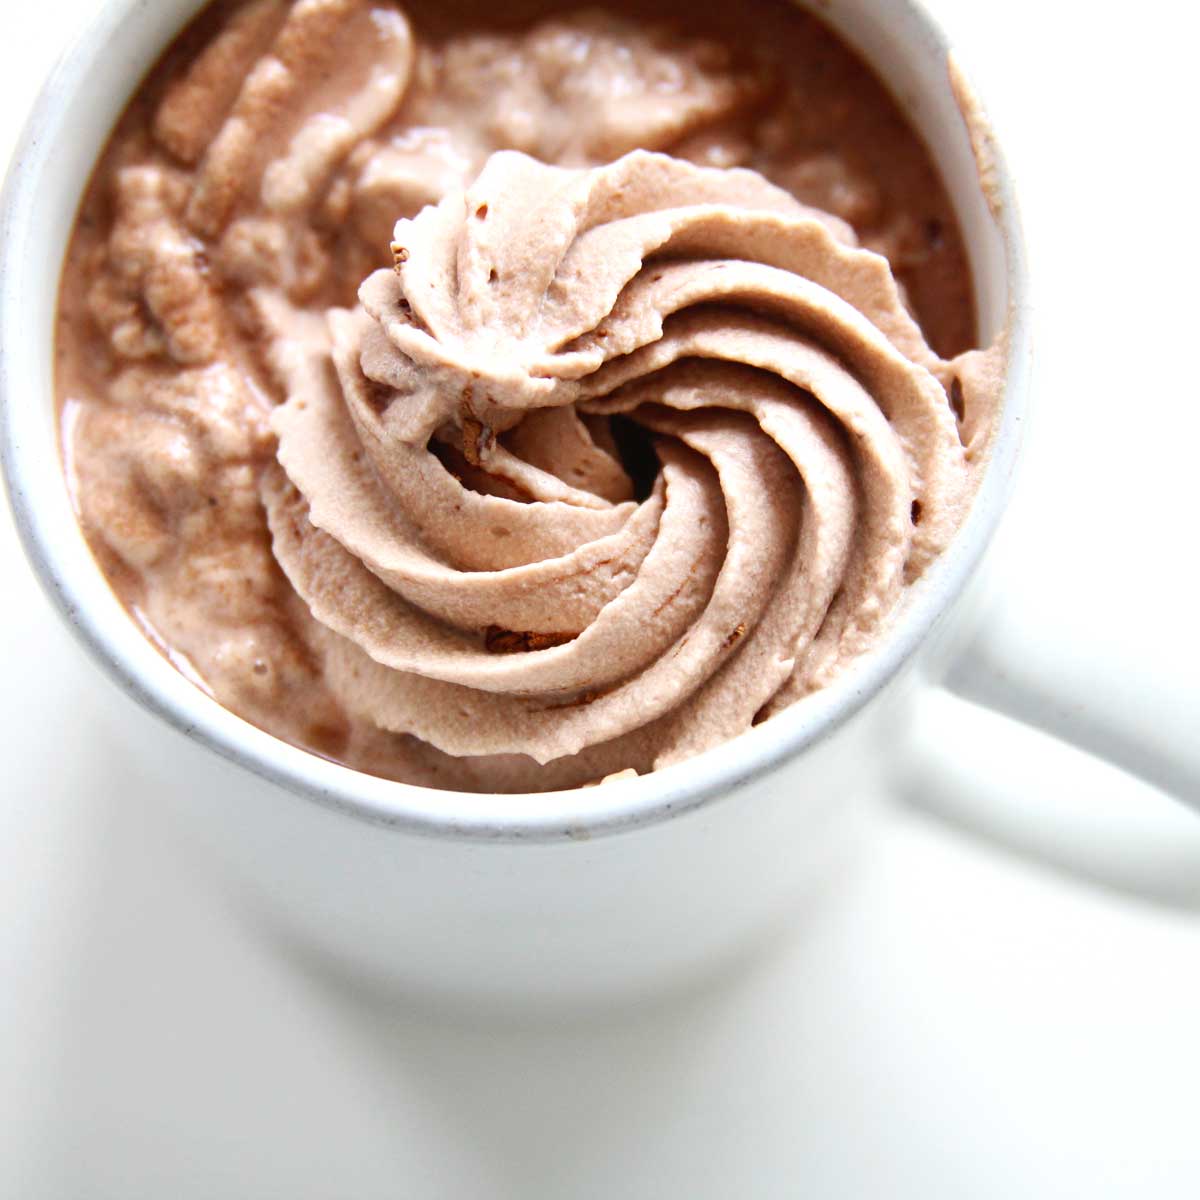 Easy No-Fuss Chocolate Whipped Cream Recipe Using Cocoa Powder - Vegan Chocolate Whipped Cream